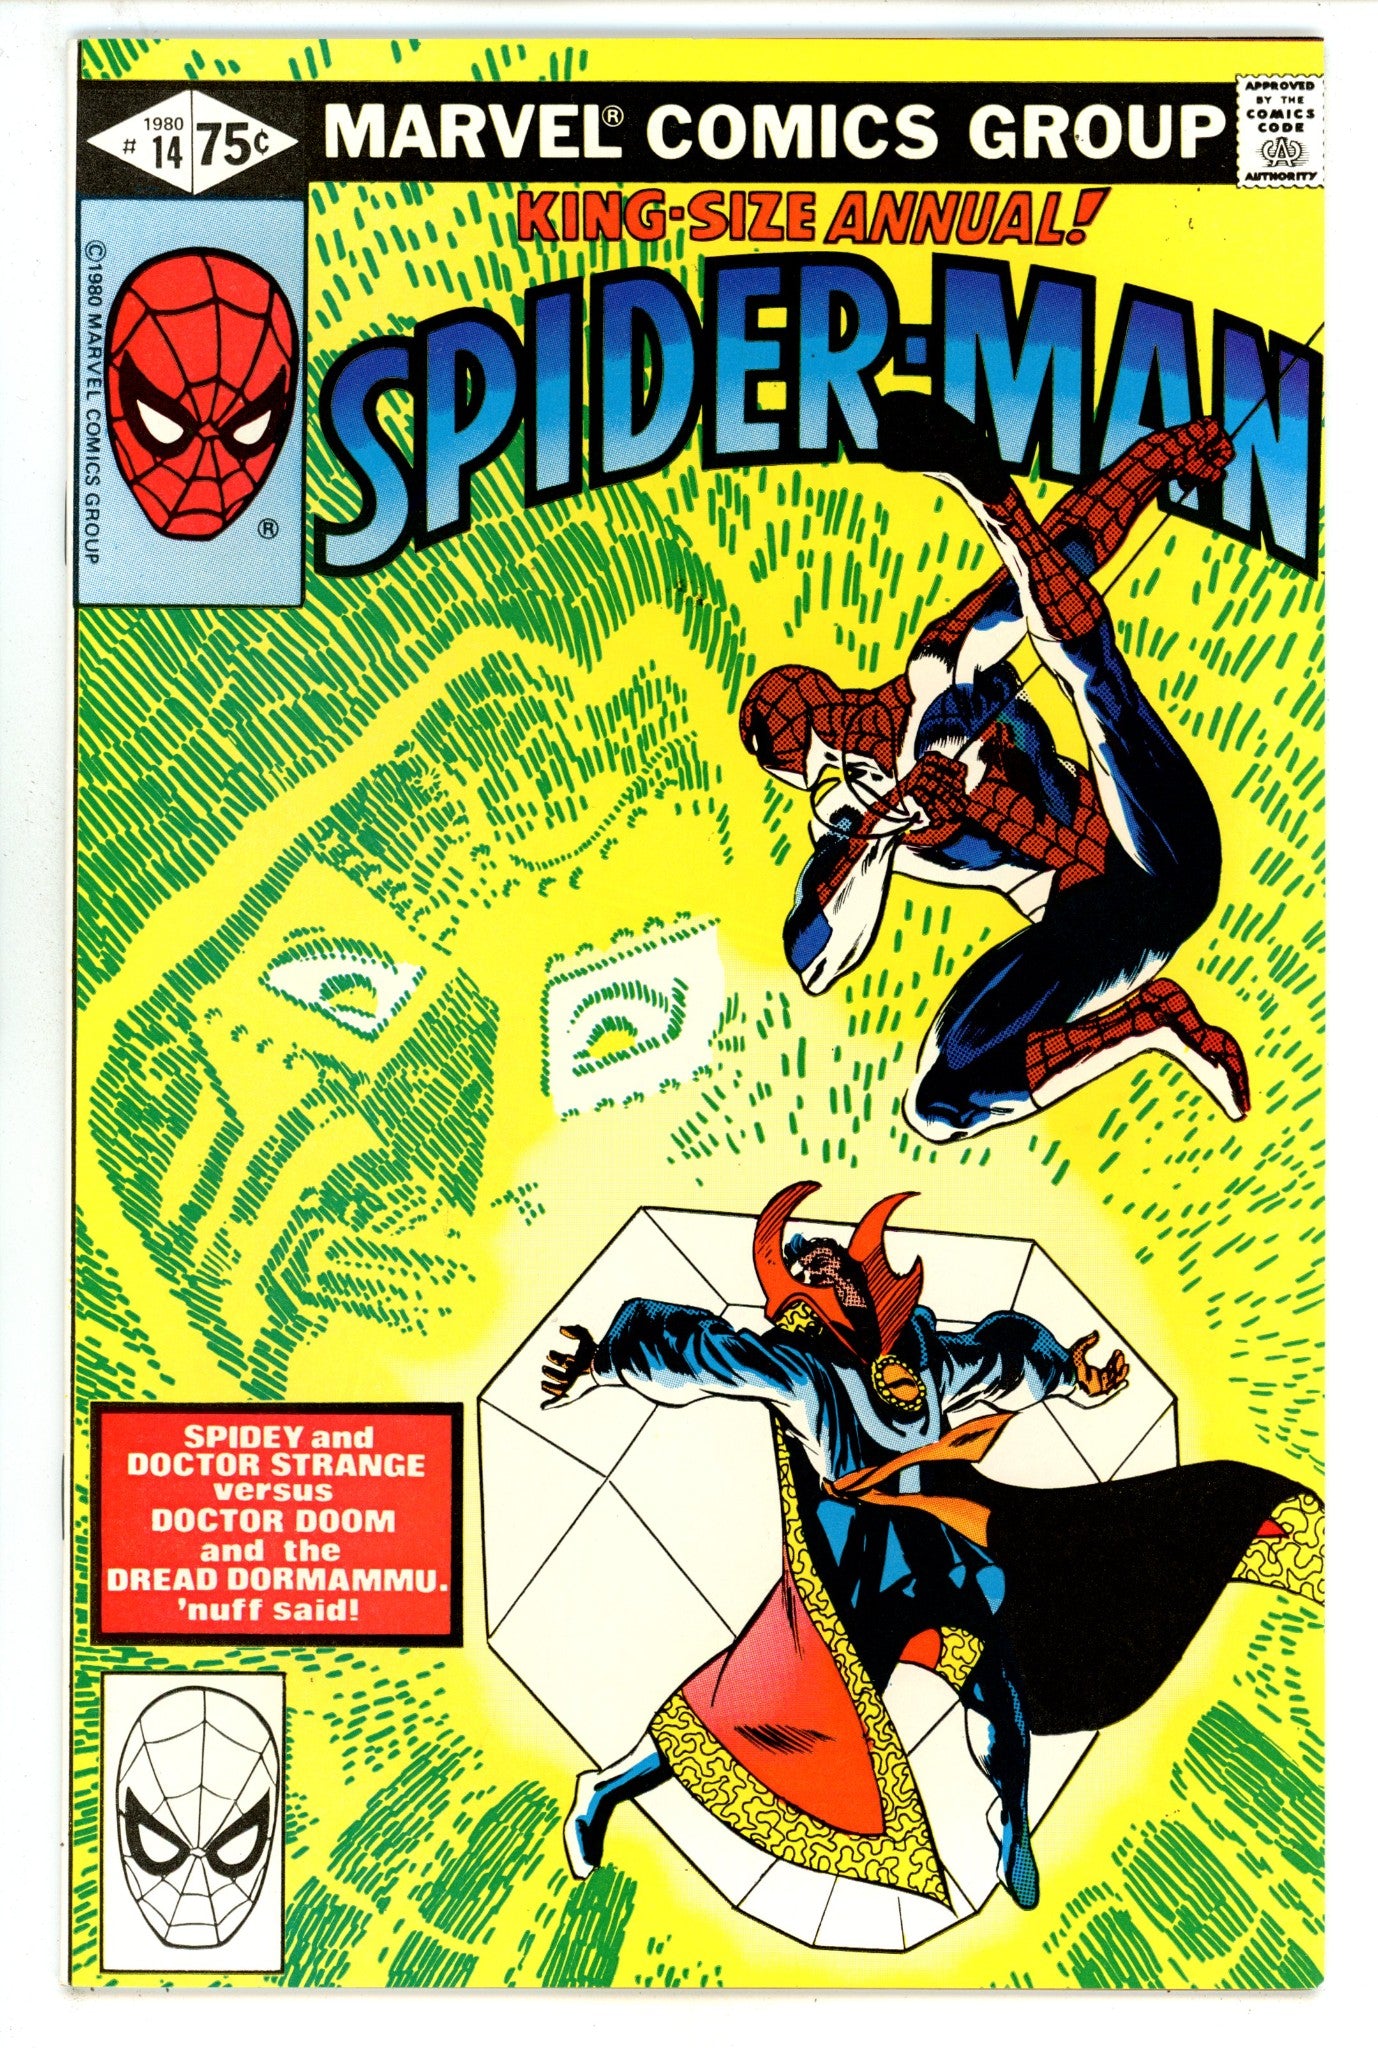 The Amazing Spider-Man Annual Vol 1 14 VF/NM (9.0) (1980) 